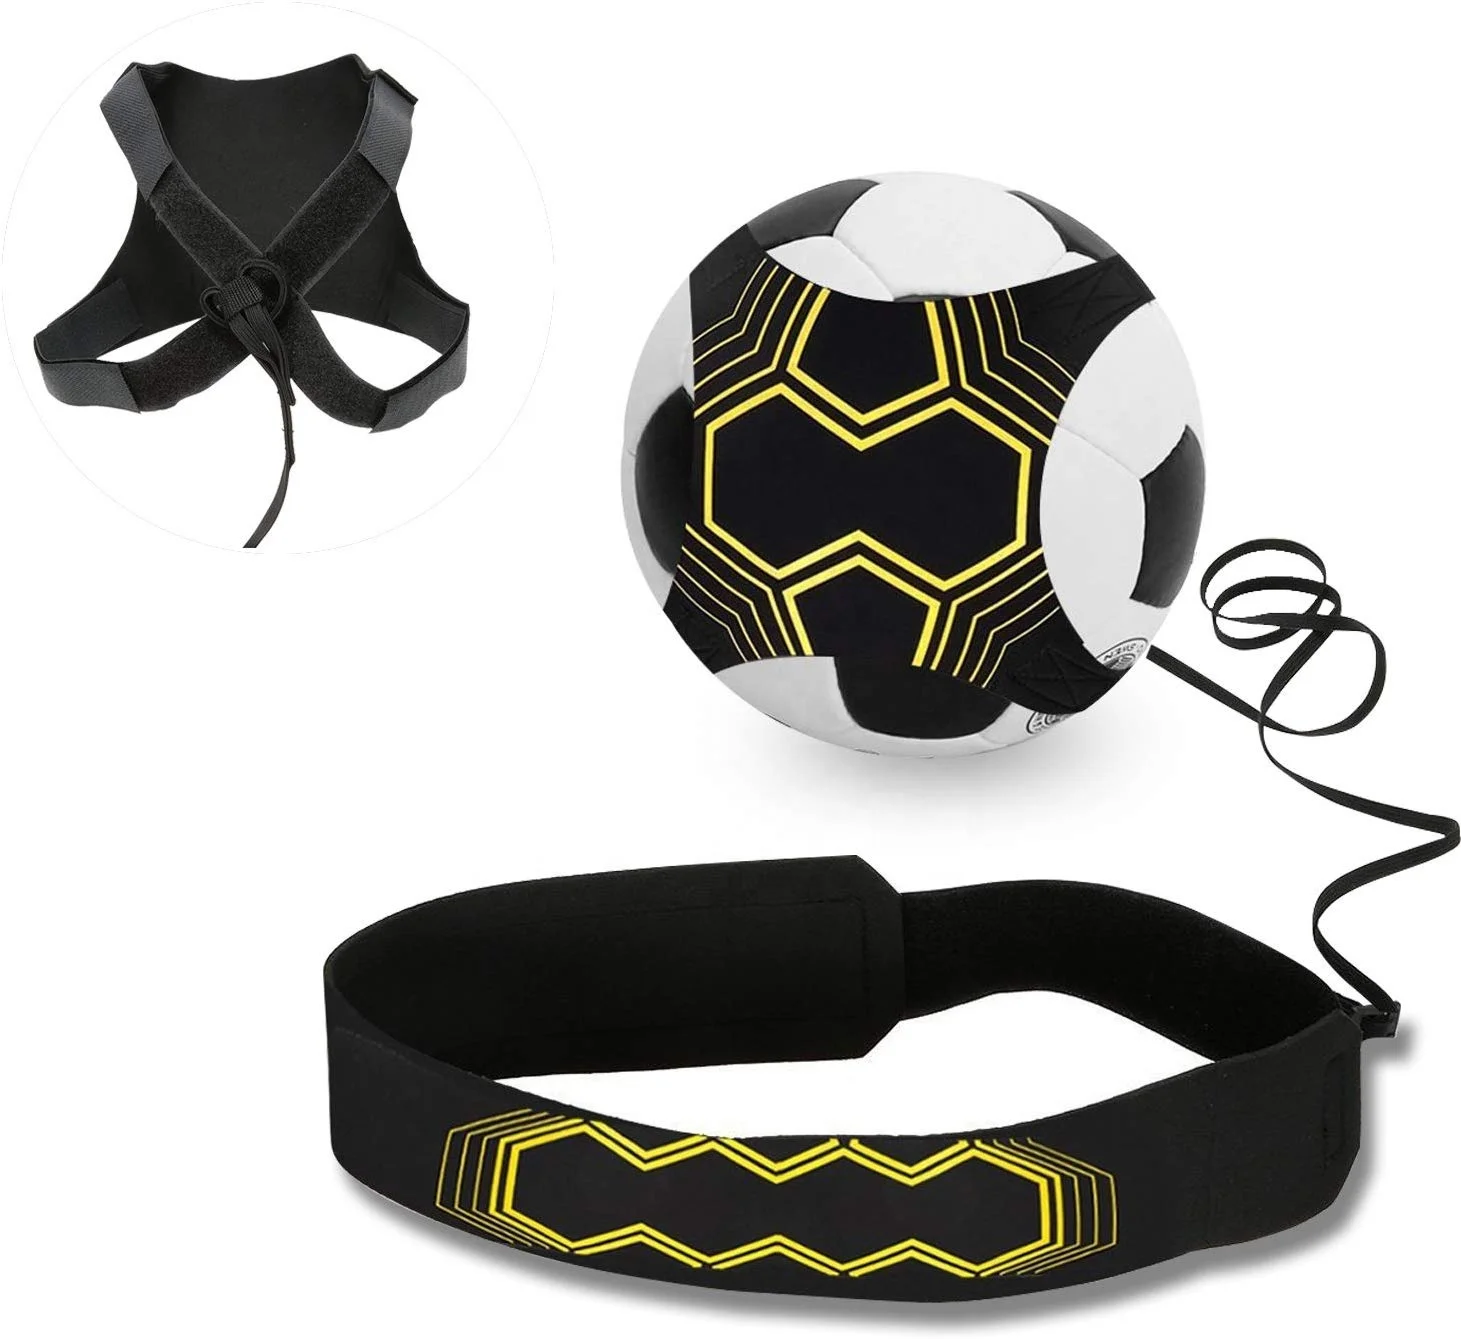 

adjustable kick solo soccer trainer training equipment for kids and adult soccer skills improvement, Custom color